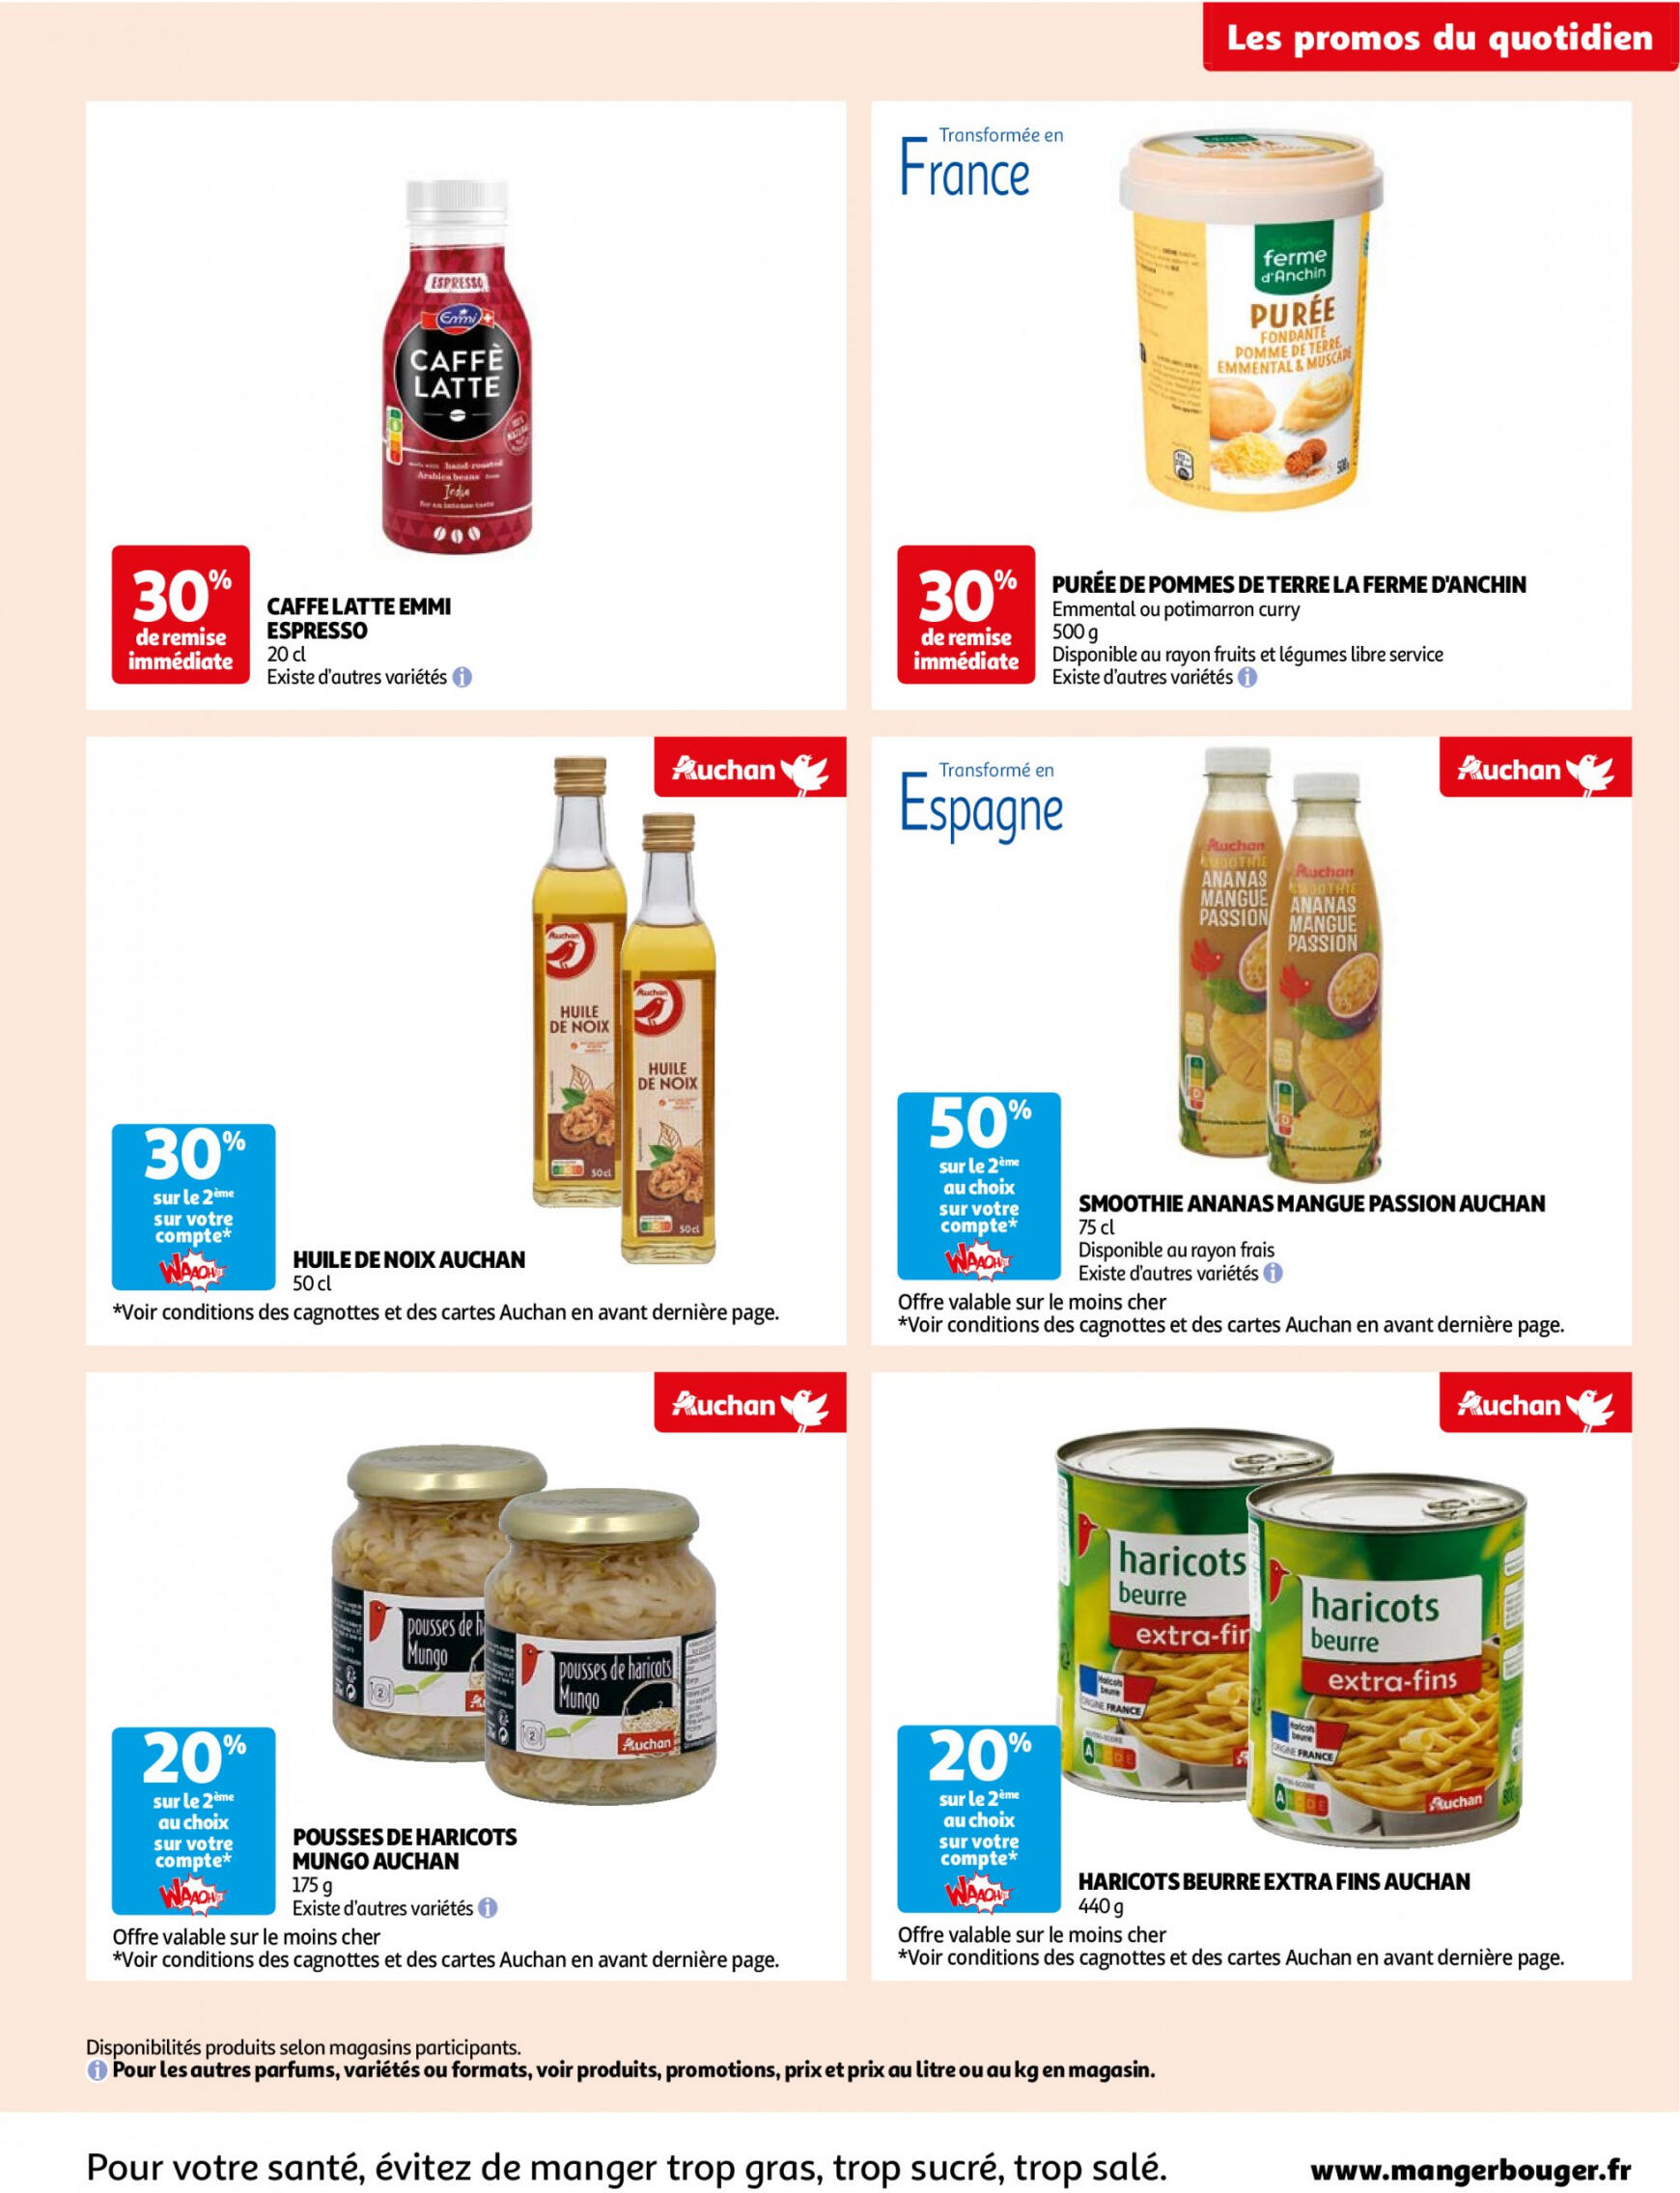 auchan - Auchan - Supermarché folder huidig 14.05. - 02.06. - page: 3